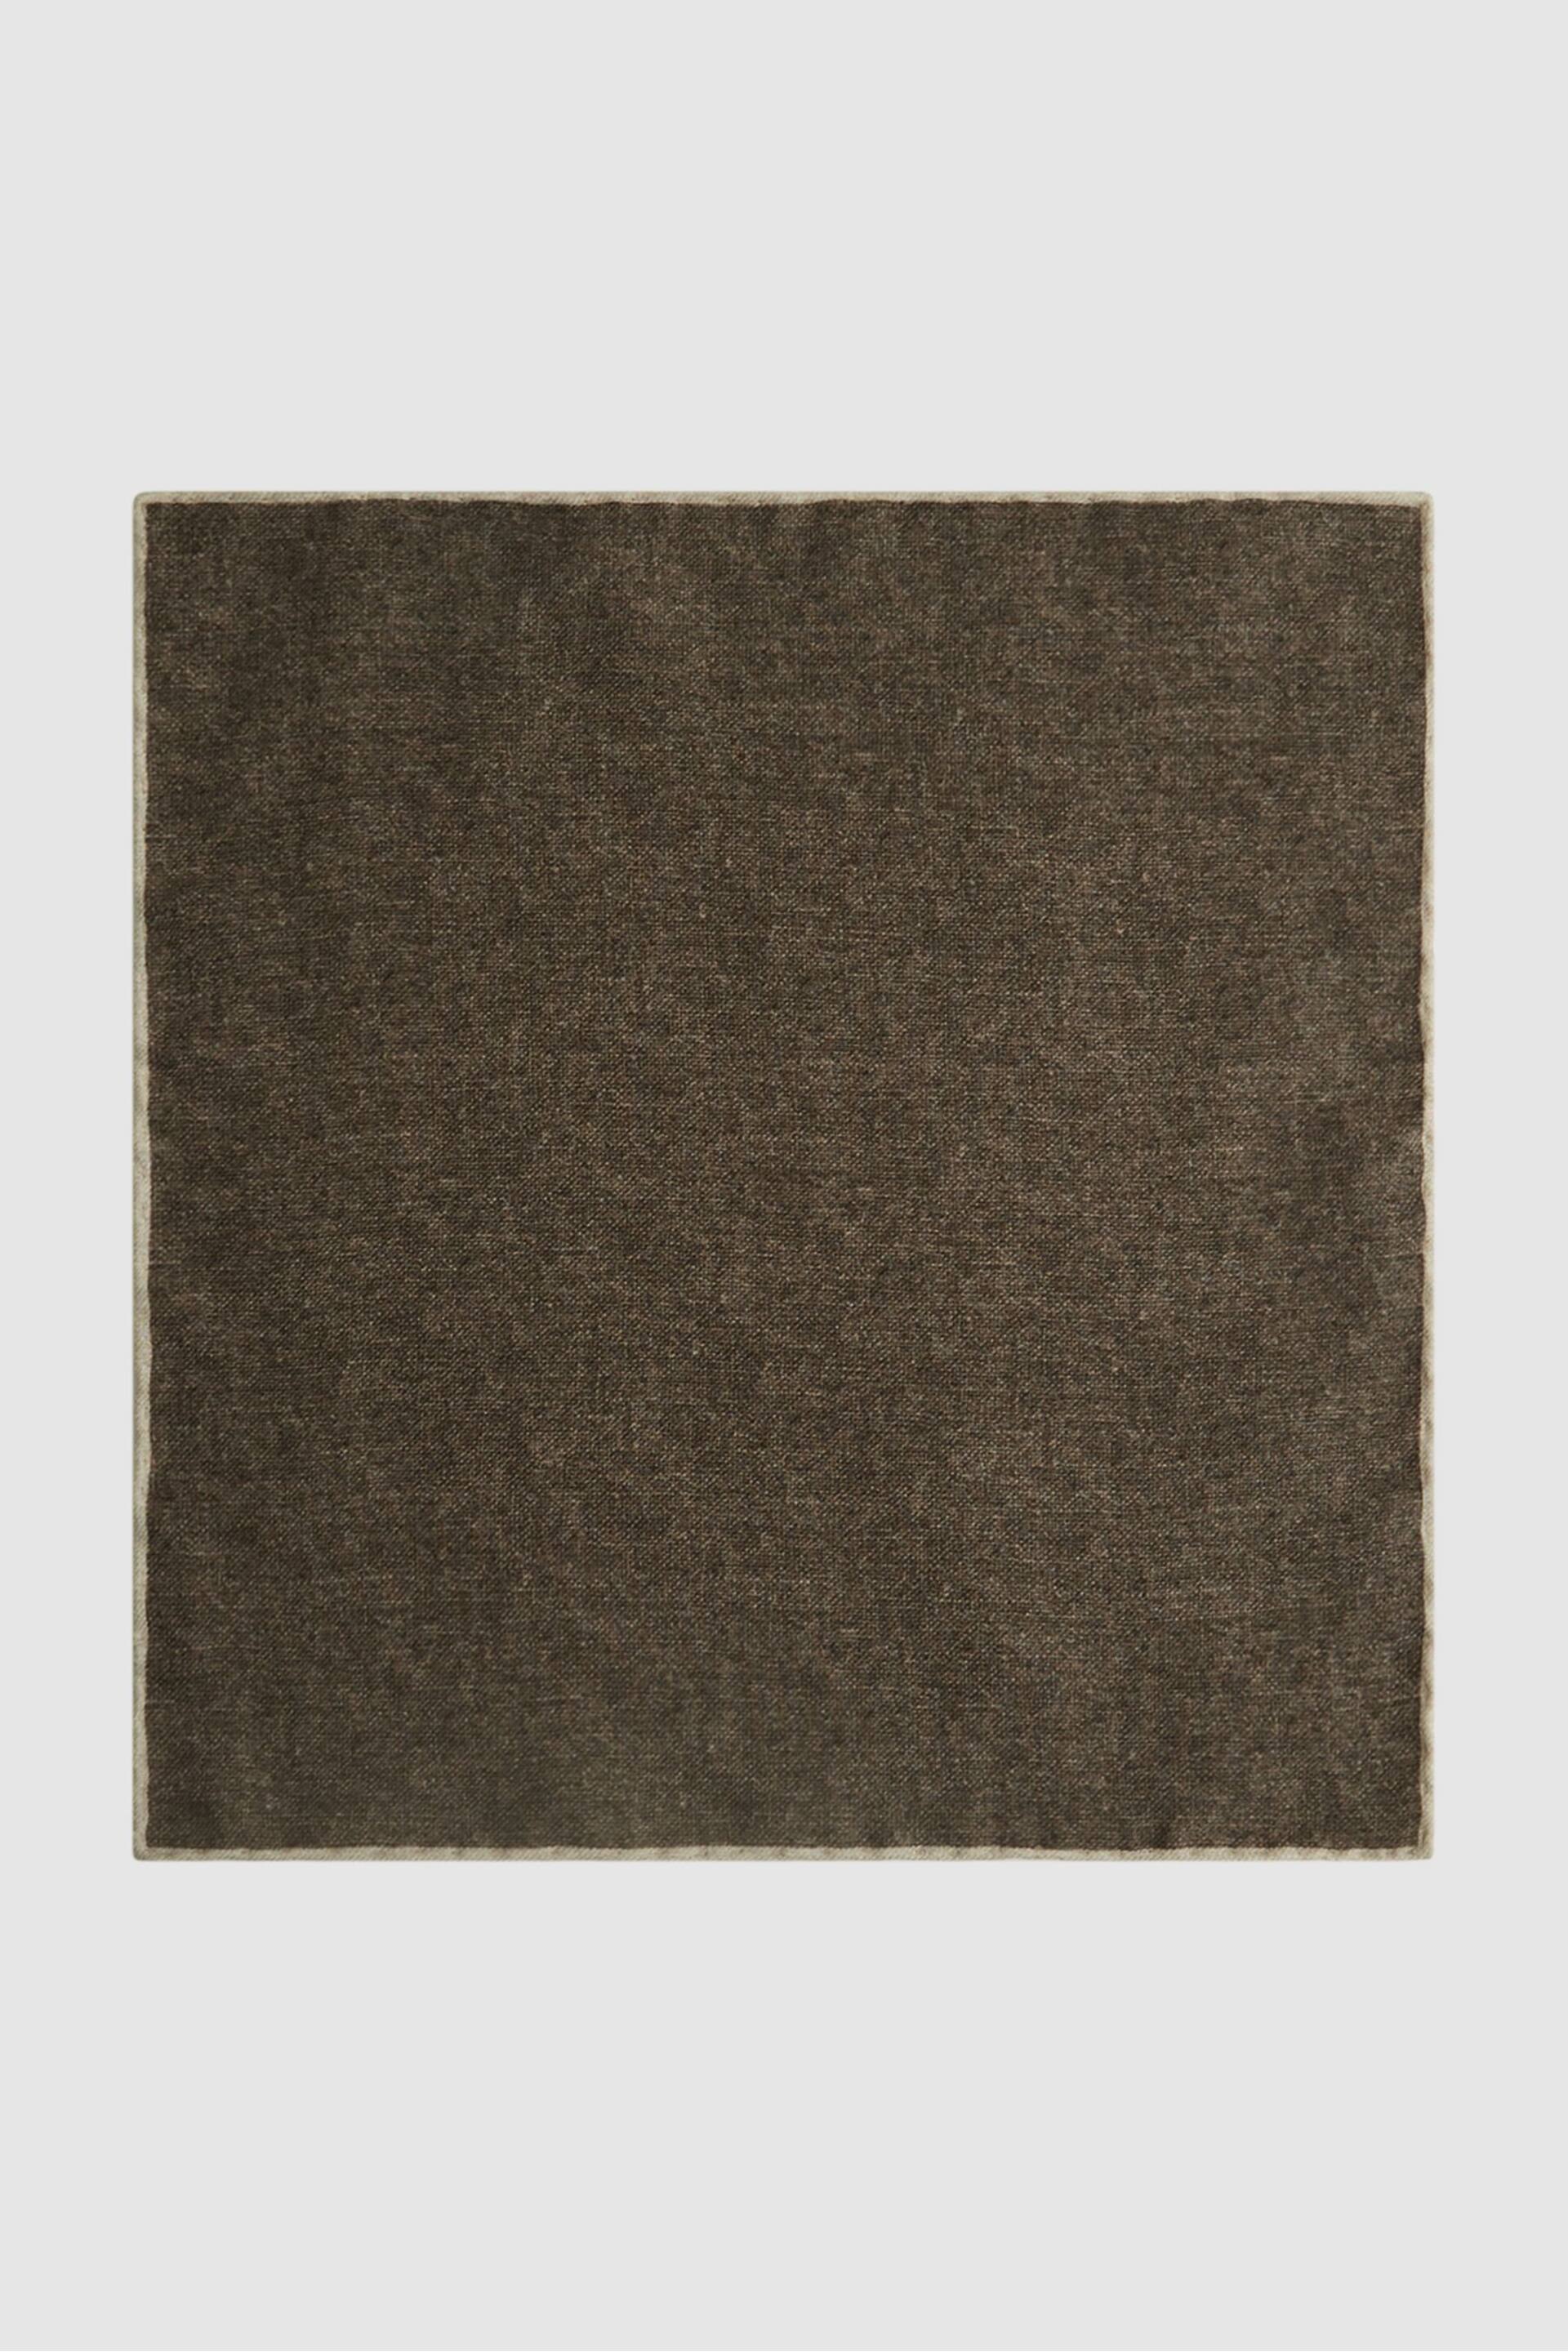 Reiss Mocha Halley Wool-Silk Blend Pocket Square - Image 4 of 5